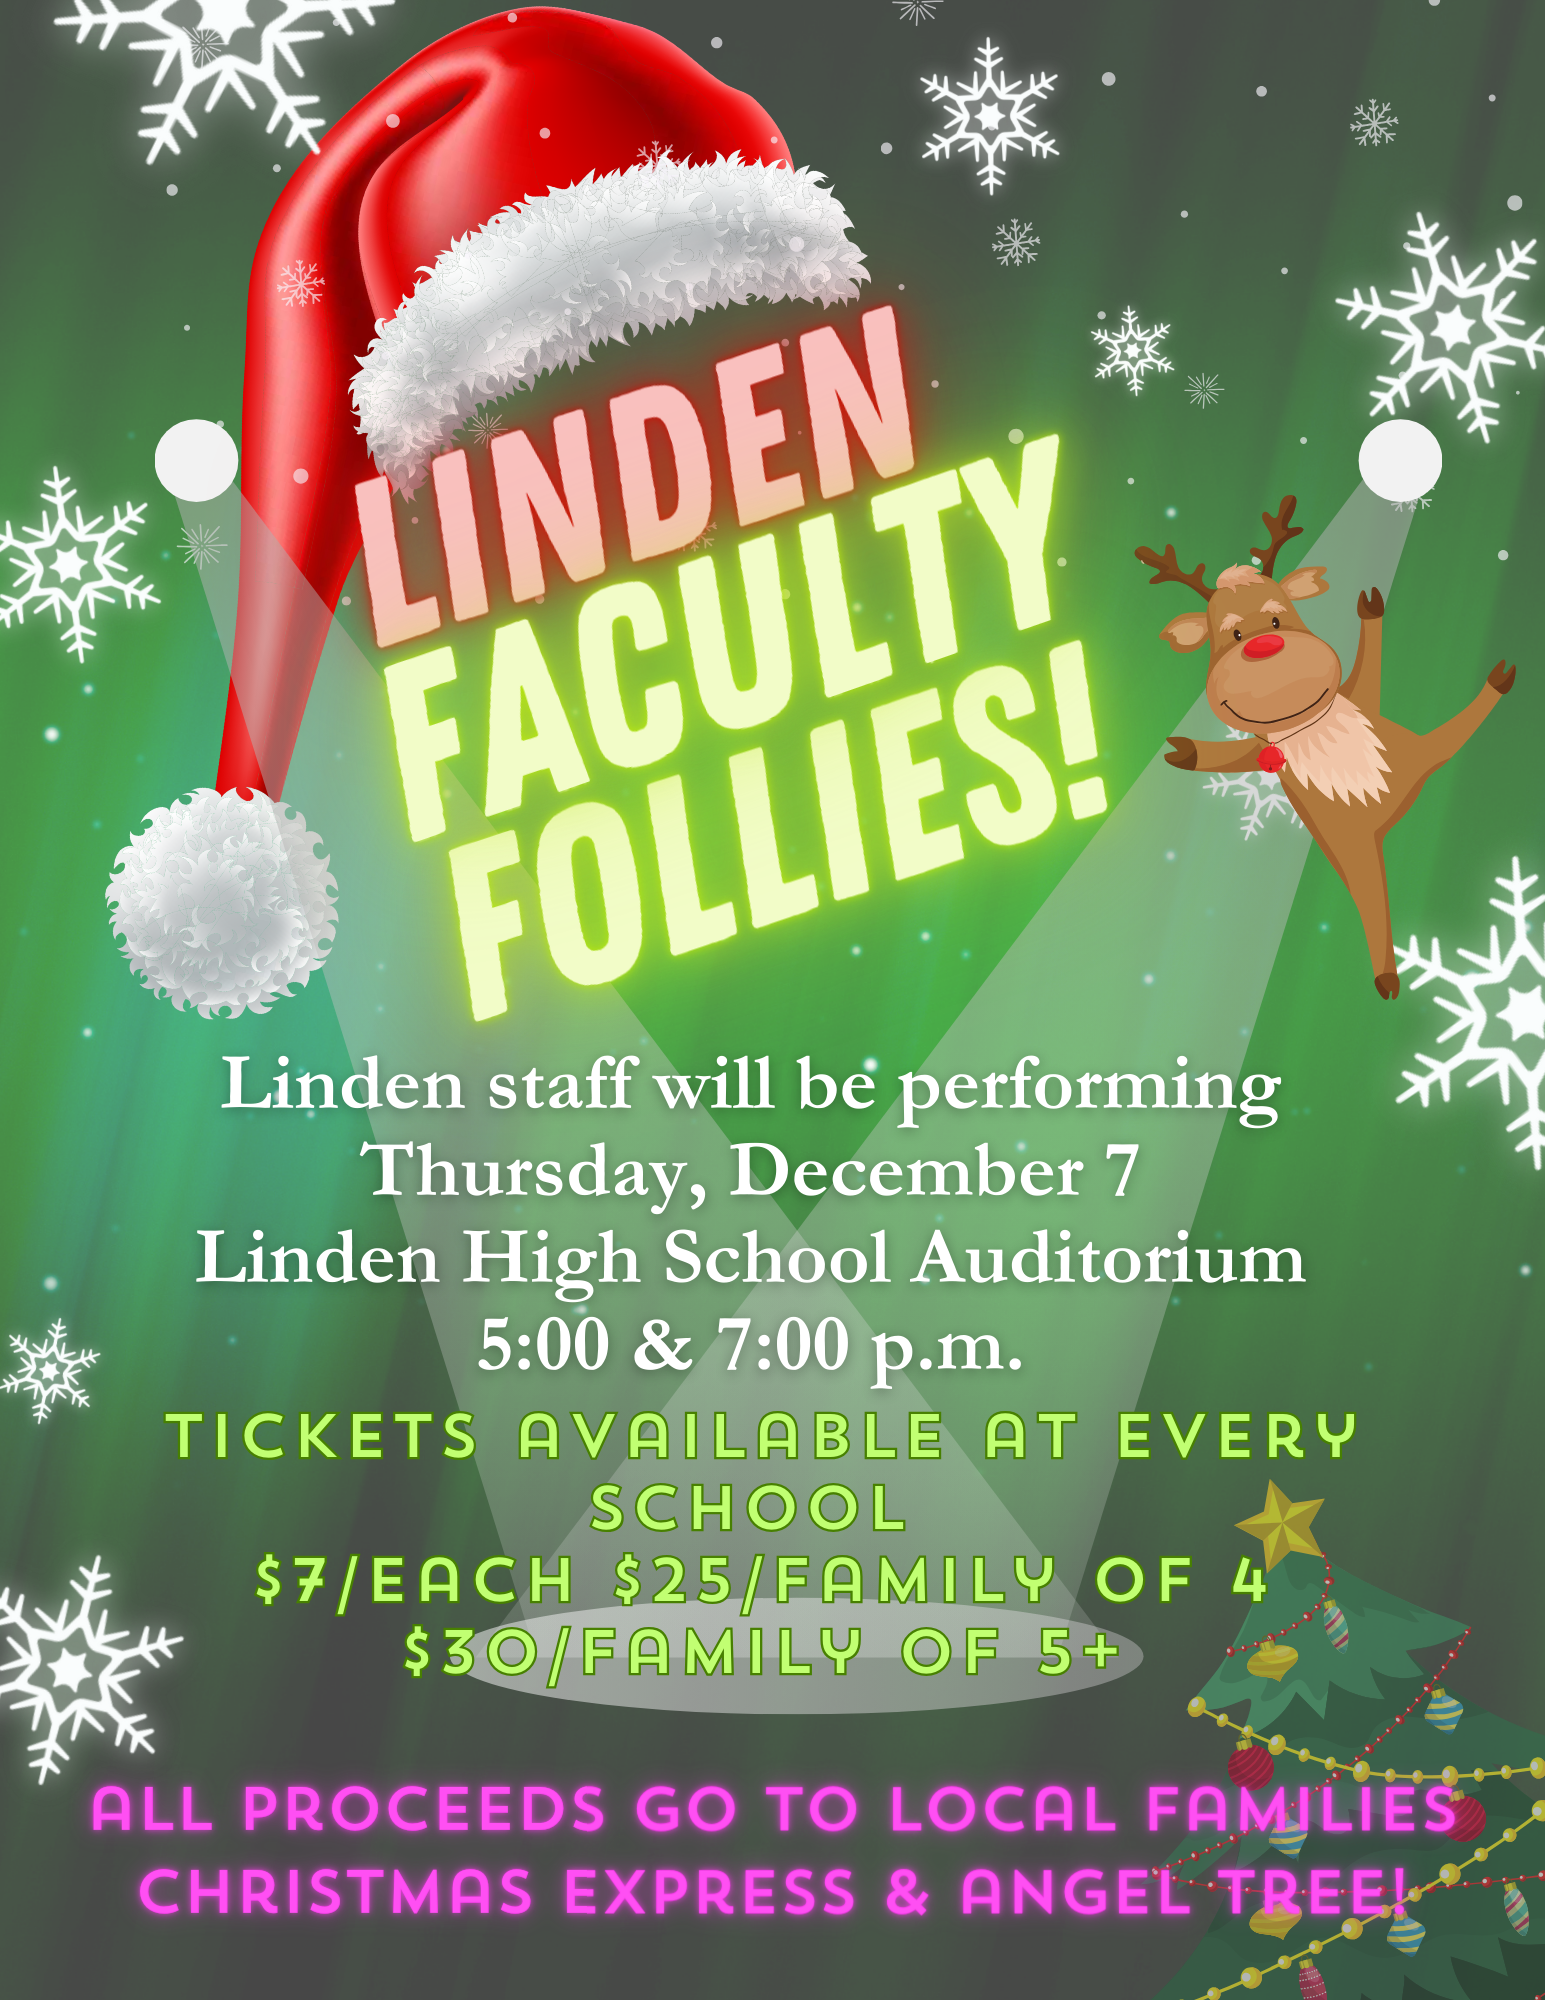 Linden Faculty Follies December 7th